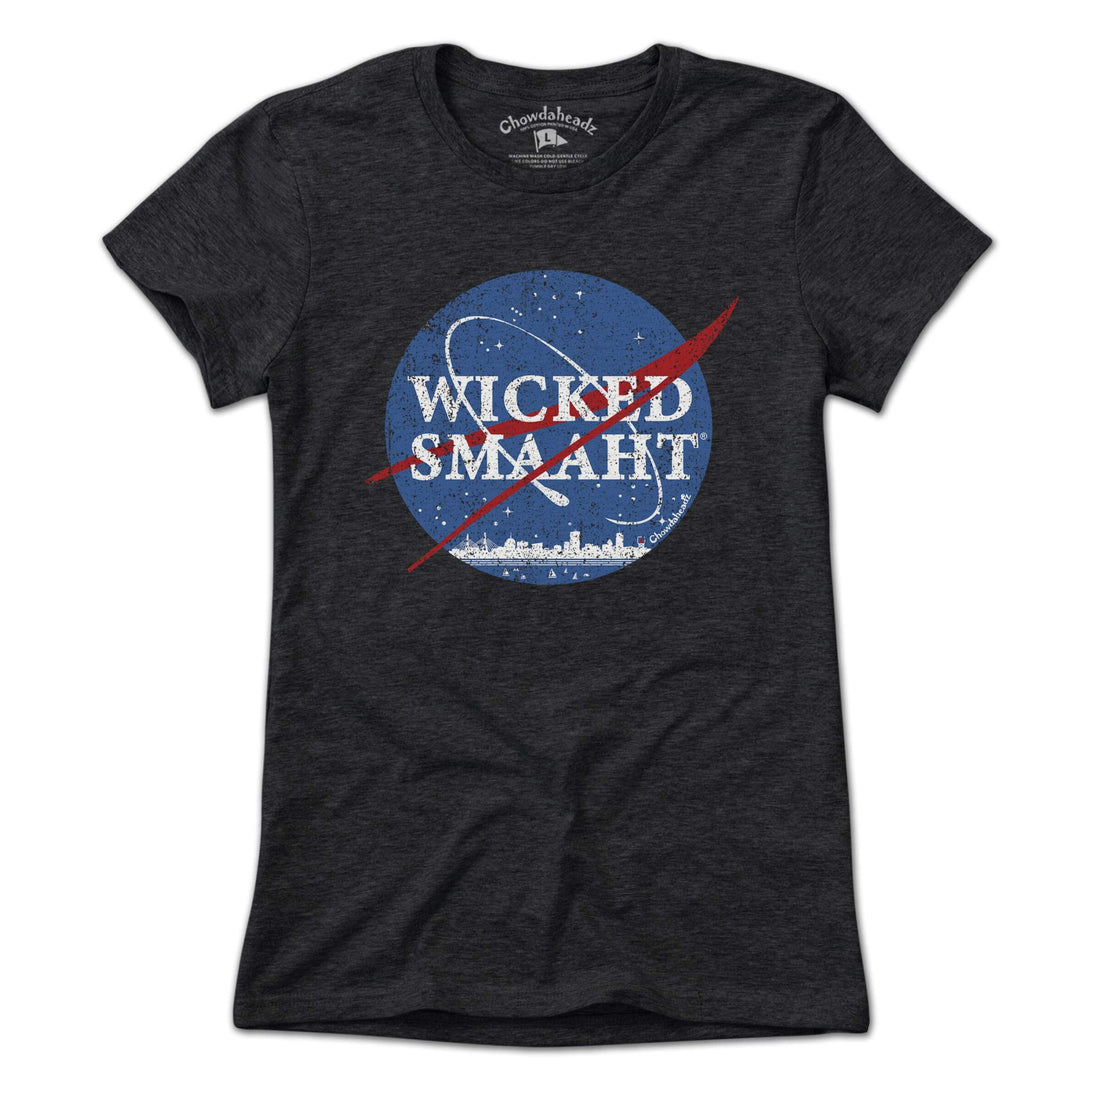 Wicked Smaaht Space T-Shirt - Chowdaheadz